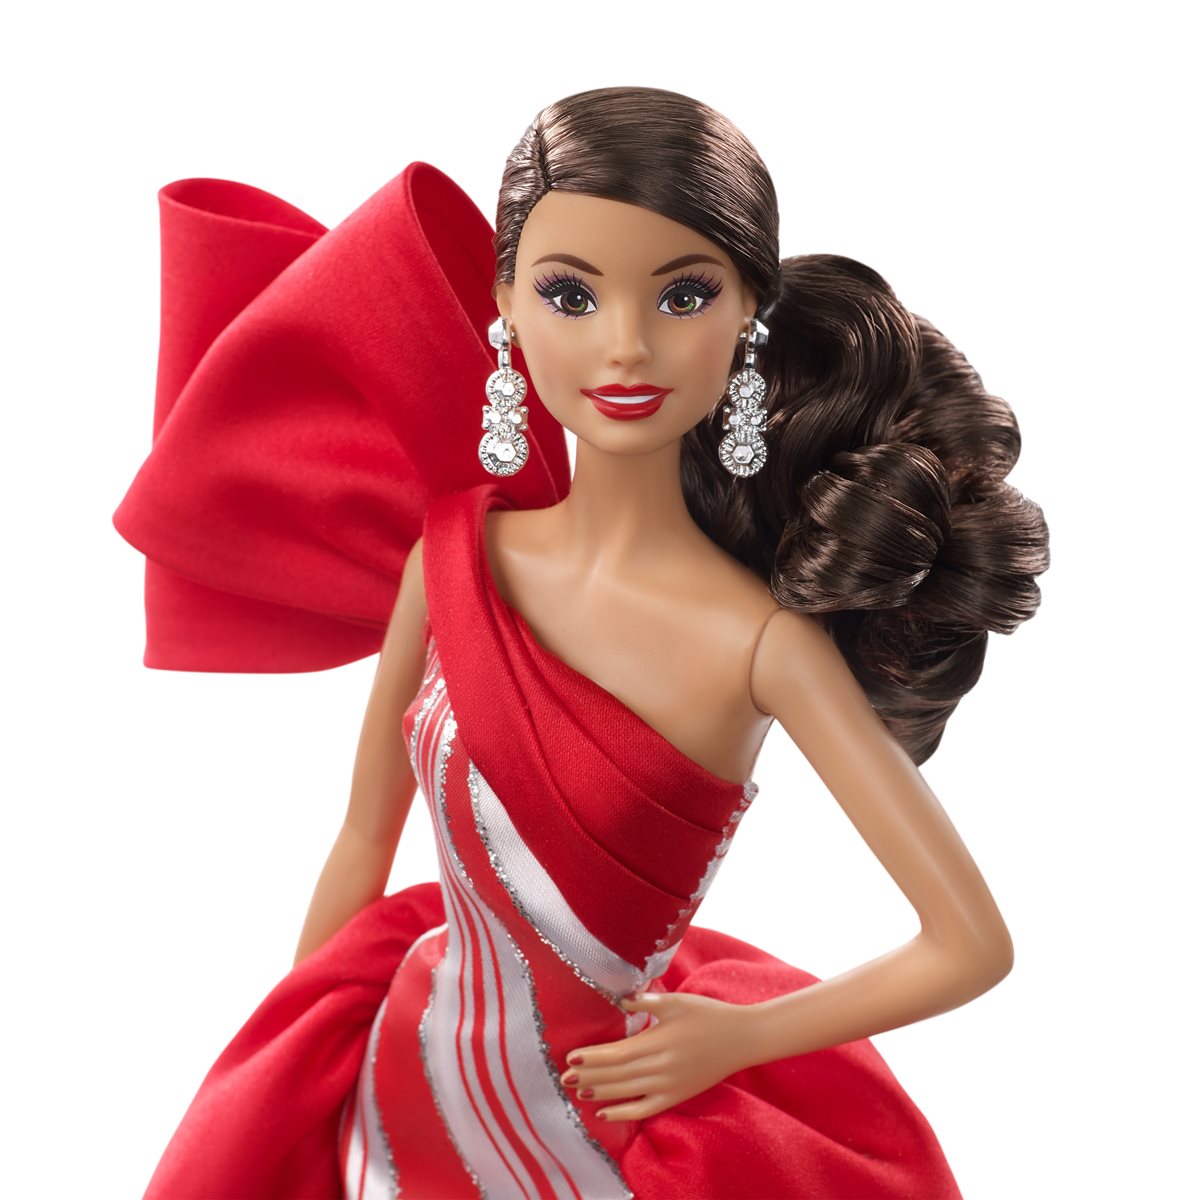 Mattel Holiday Barbie Dolls